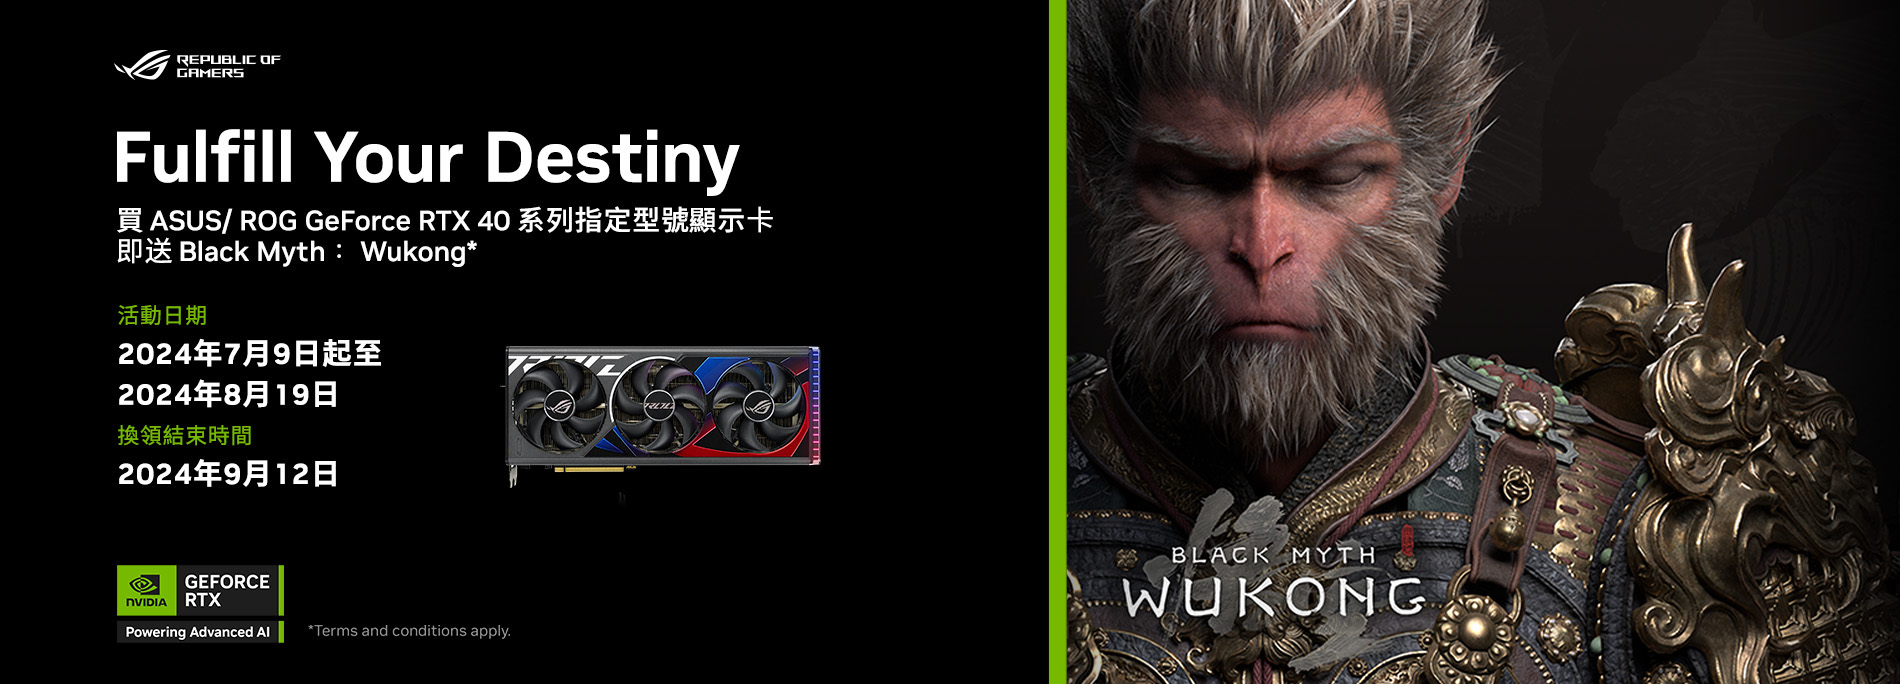 【Fulfill Your Destiny】買ASUS/ROG GeForce RTX 40系列指定型號顯示卡即送Black Myth：Wukong